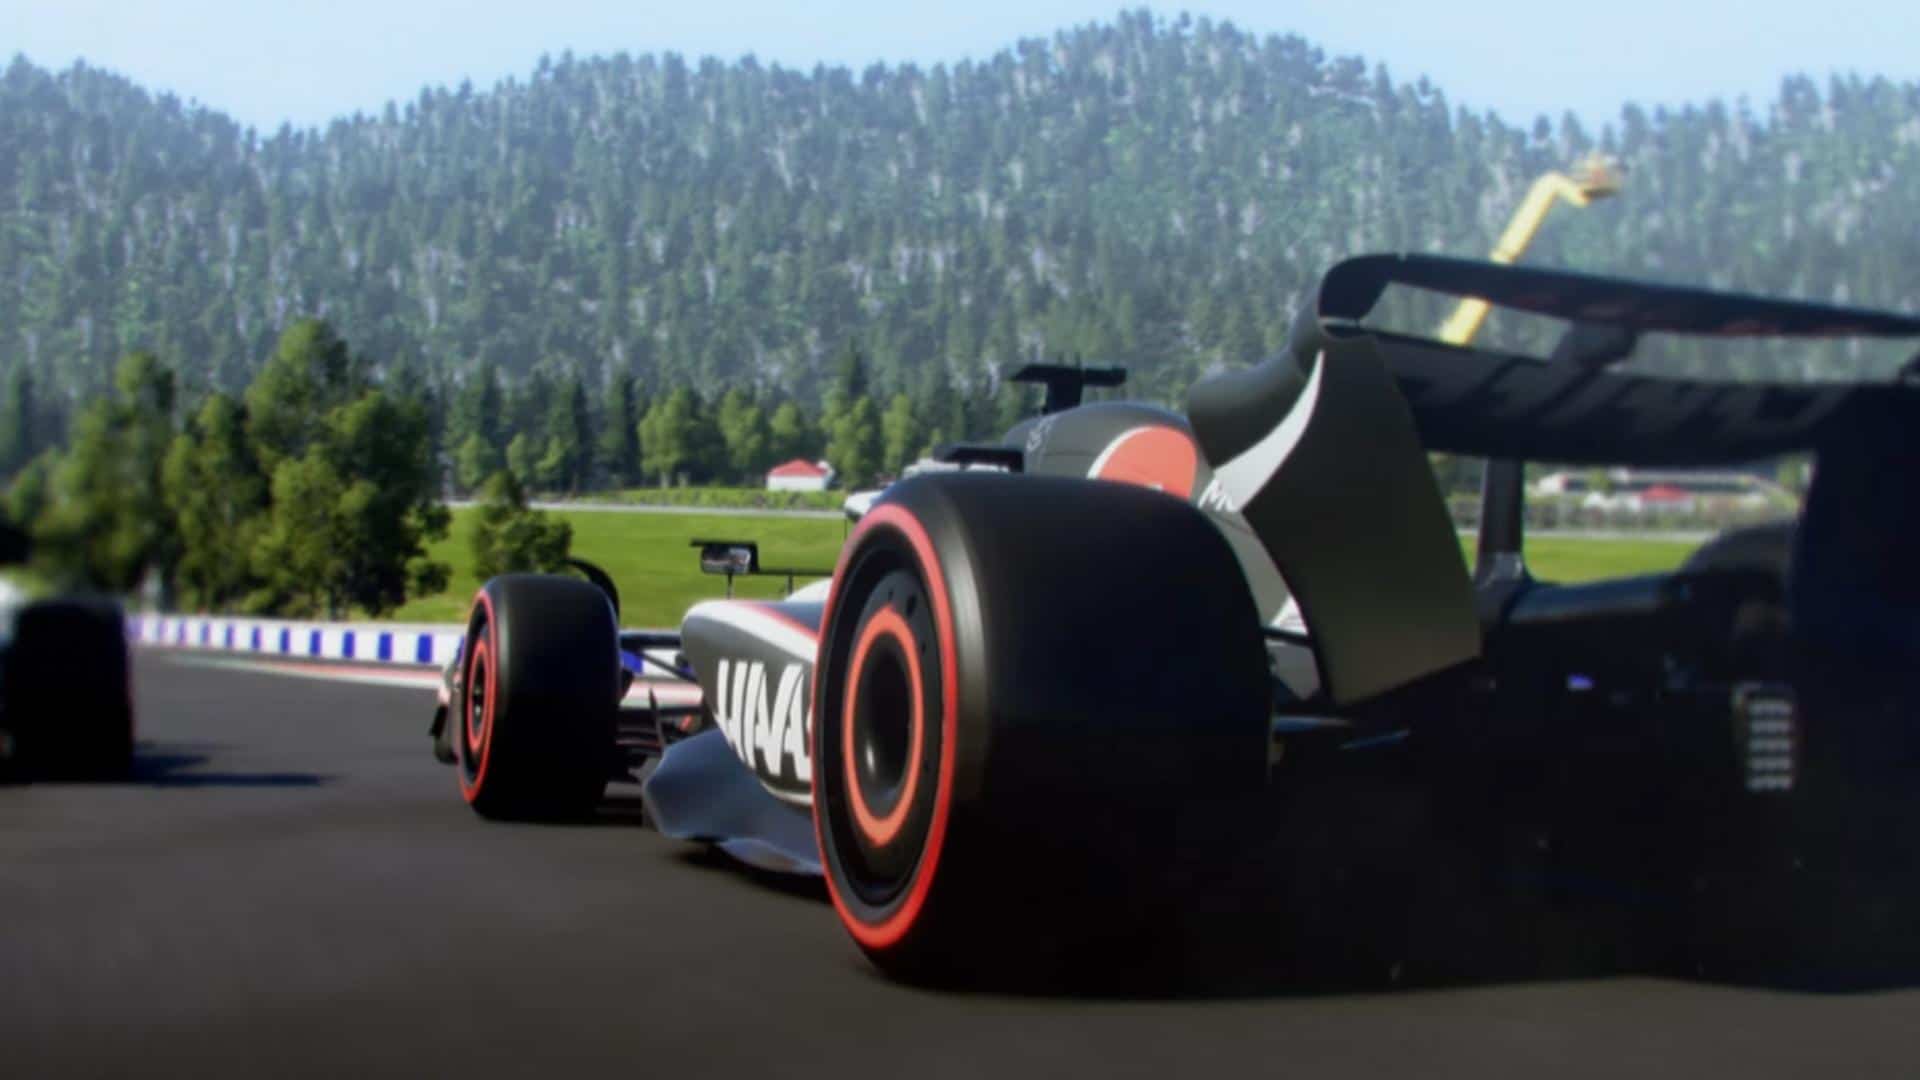 F1 2021 - PS4, PlayStation 4